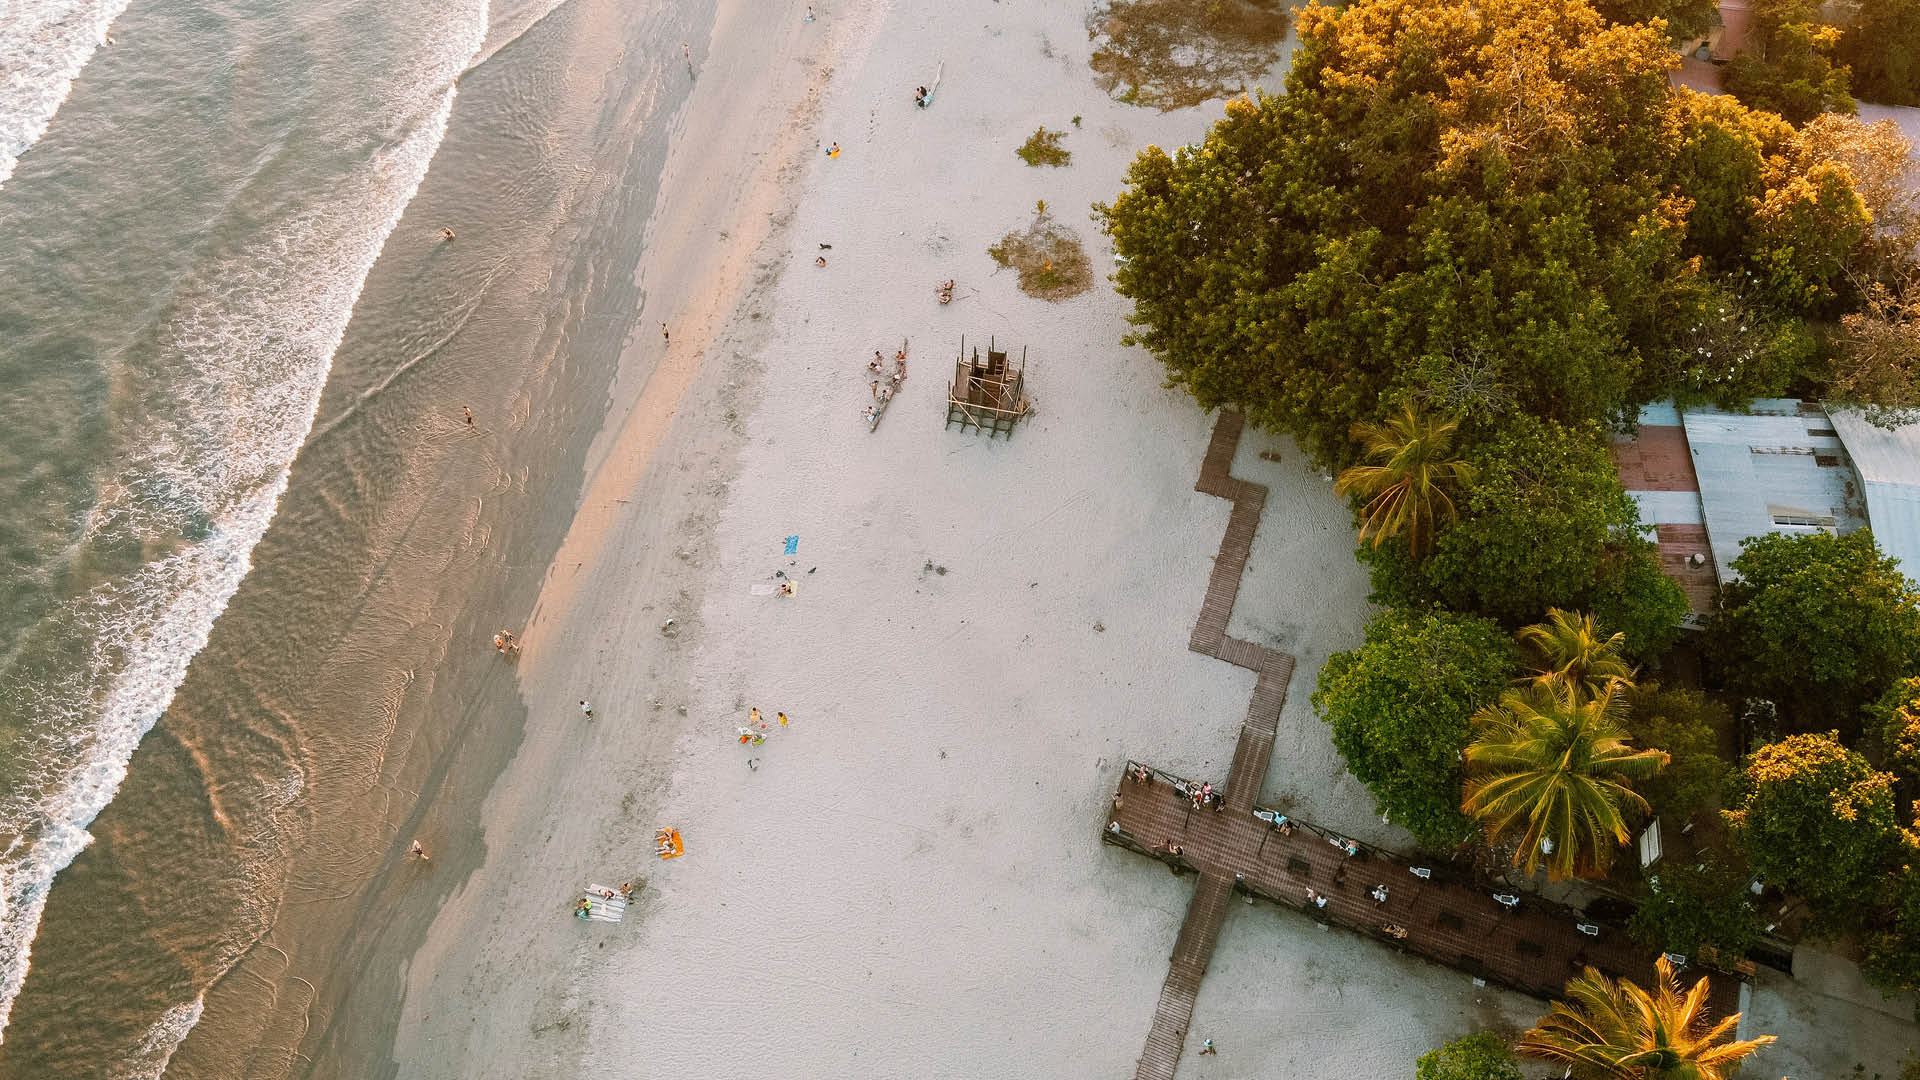 Samara beach on the Nicoya peninsula, Costa Rica